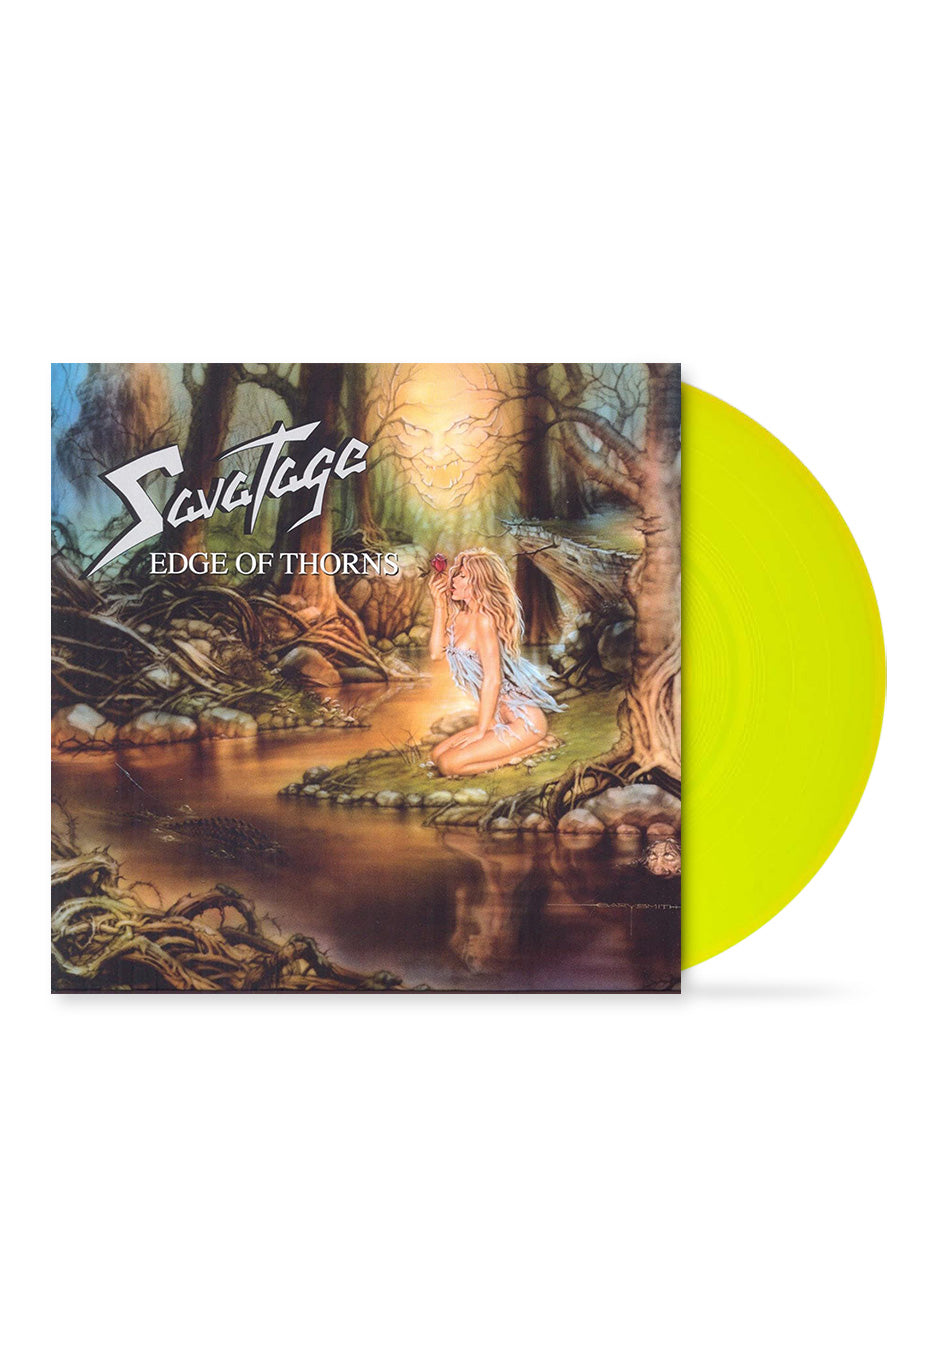 Savatage - Edge Of Thorns Ltd. Sun Yellow - Colored Vinyl